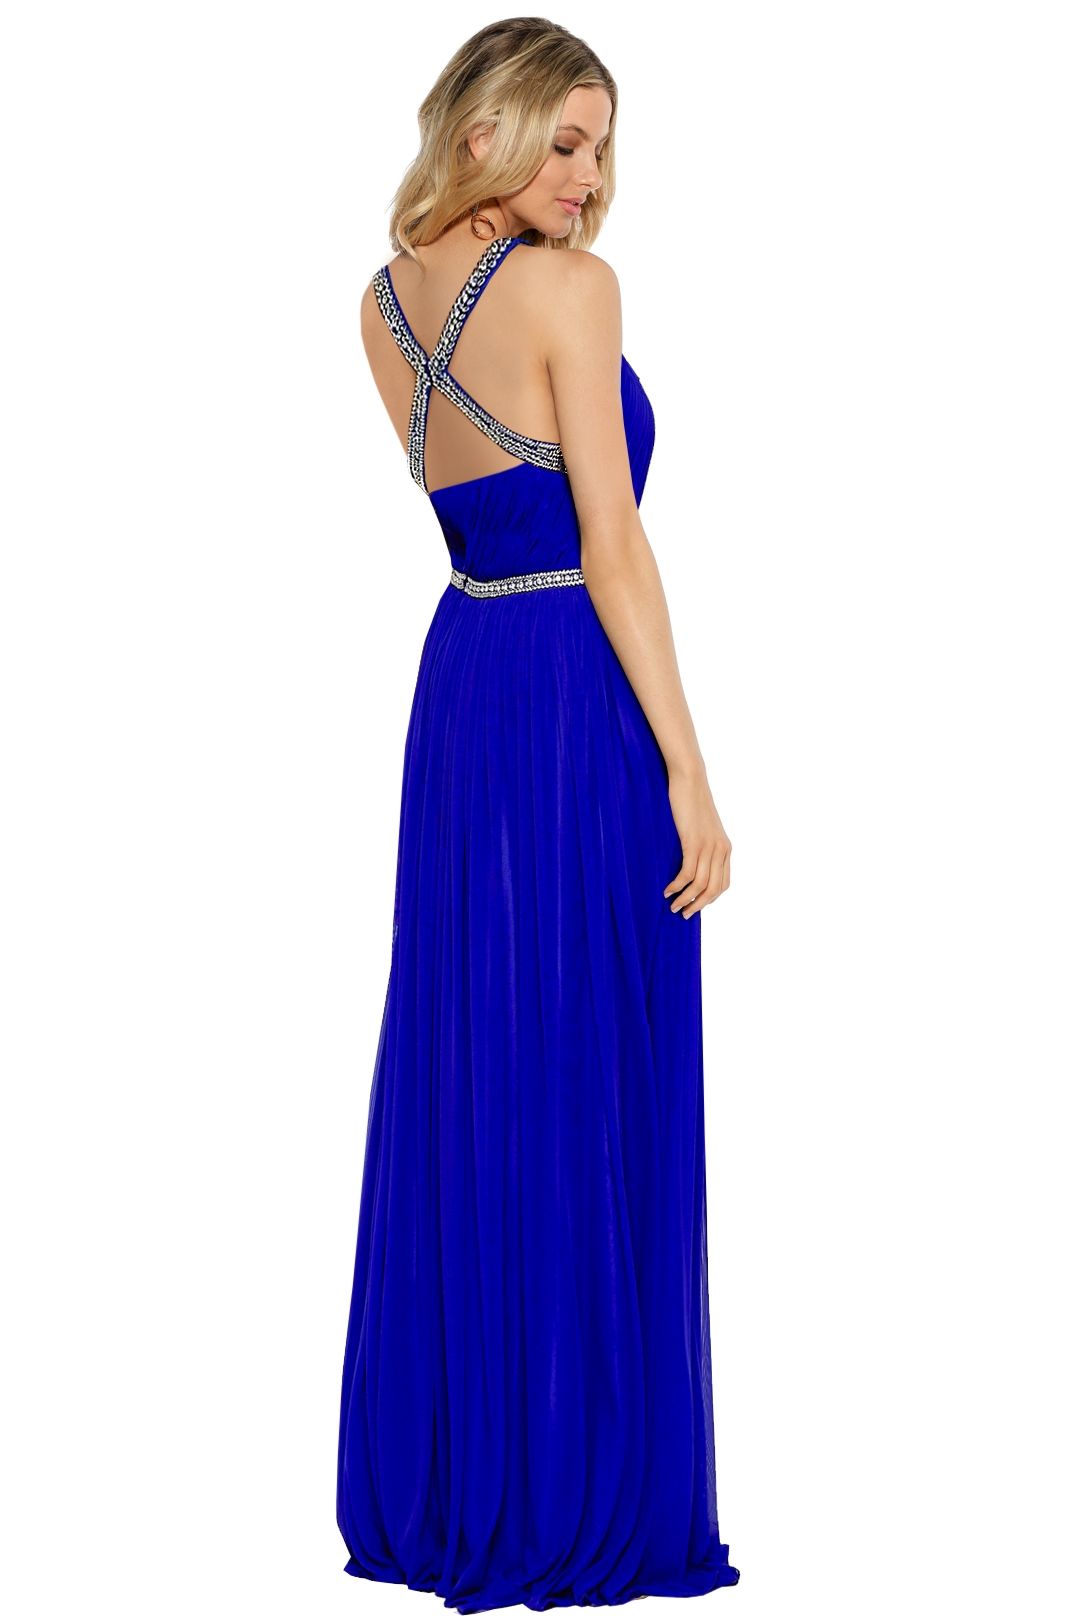 Forever Unique - Embellished Maxi Dress with Keyhole Detail - Sax Blue - Back